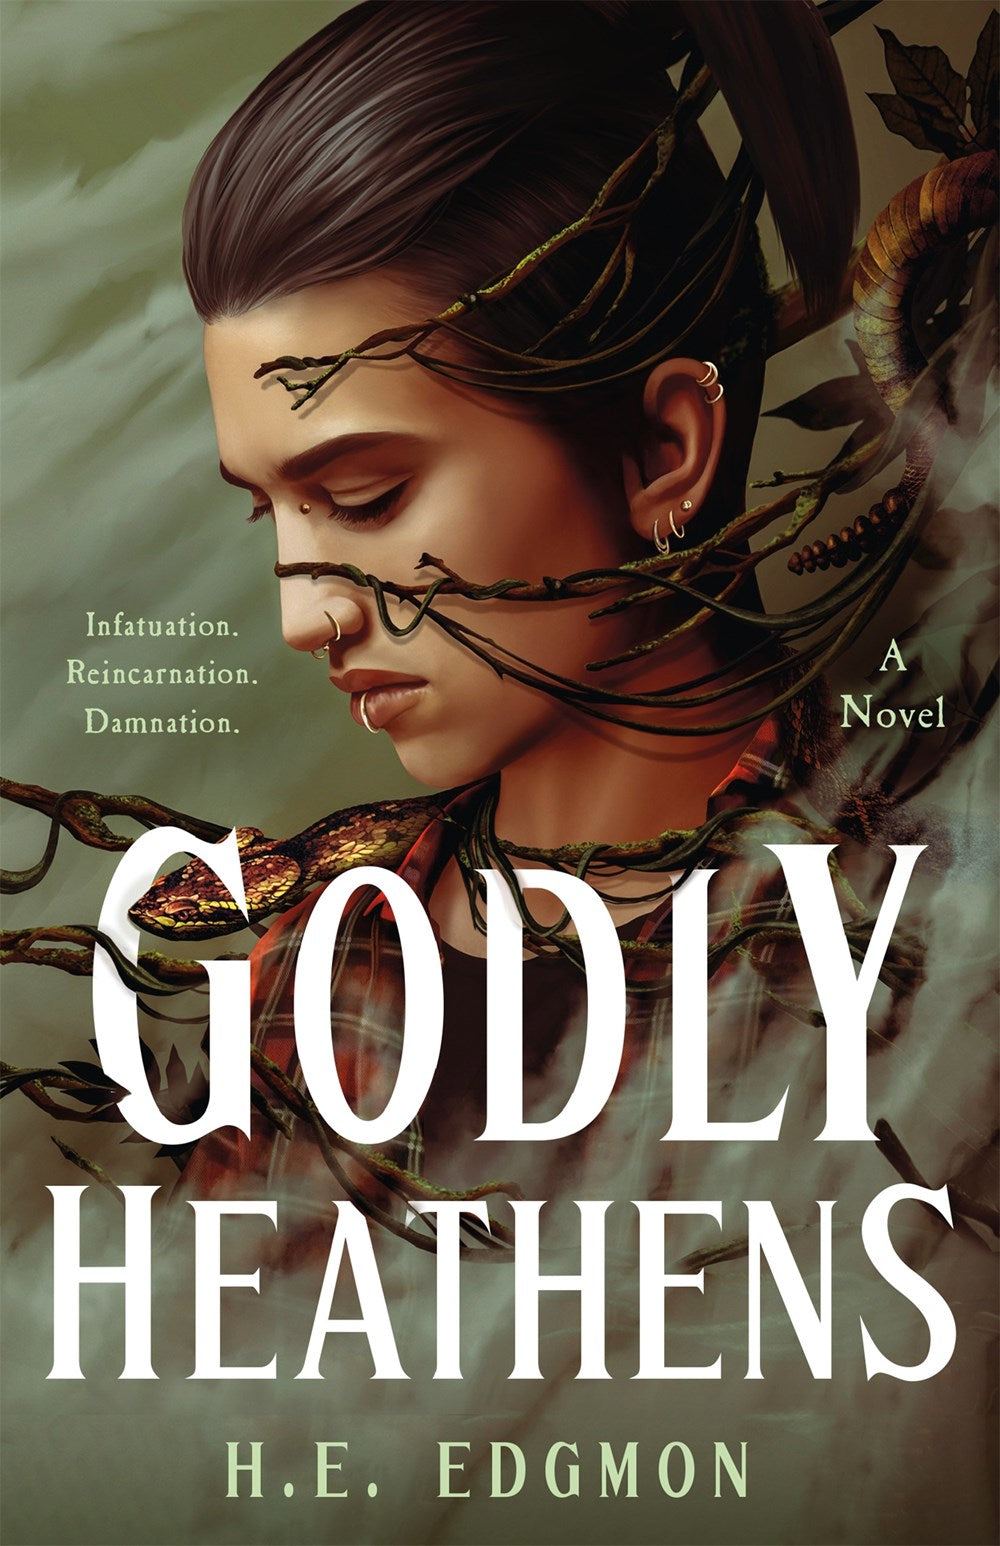 Godly Heathens by H.E. Edgmon (Ouroboros #1) (Hardcover)